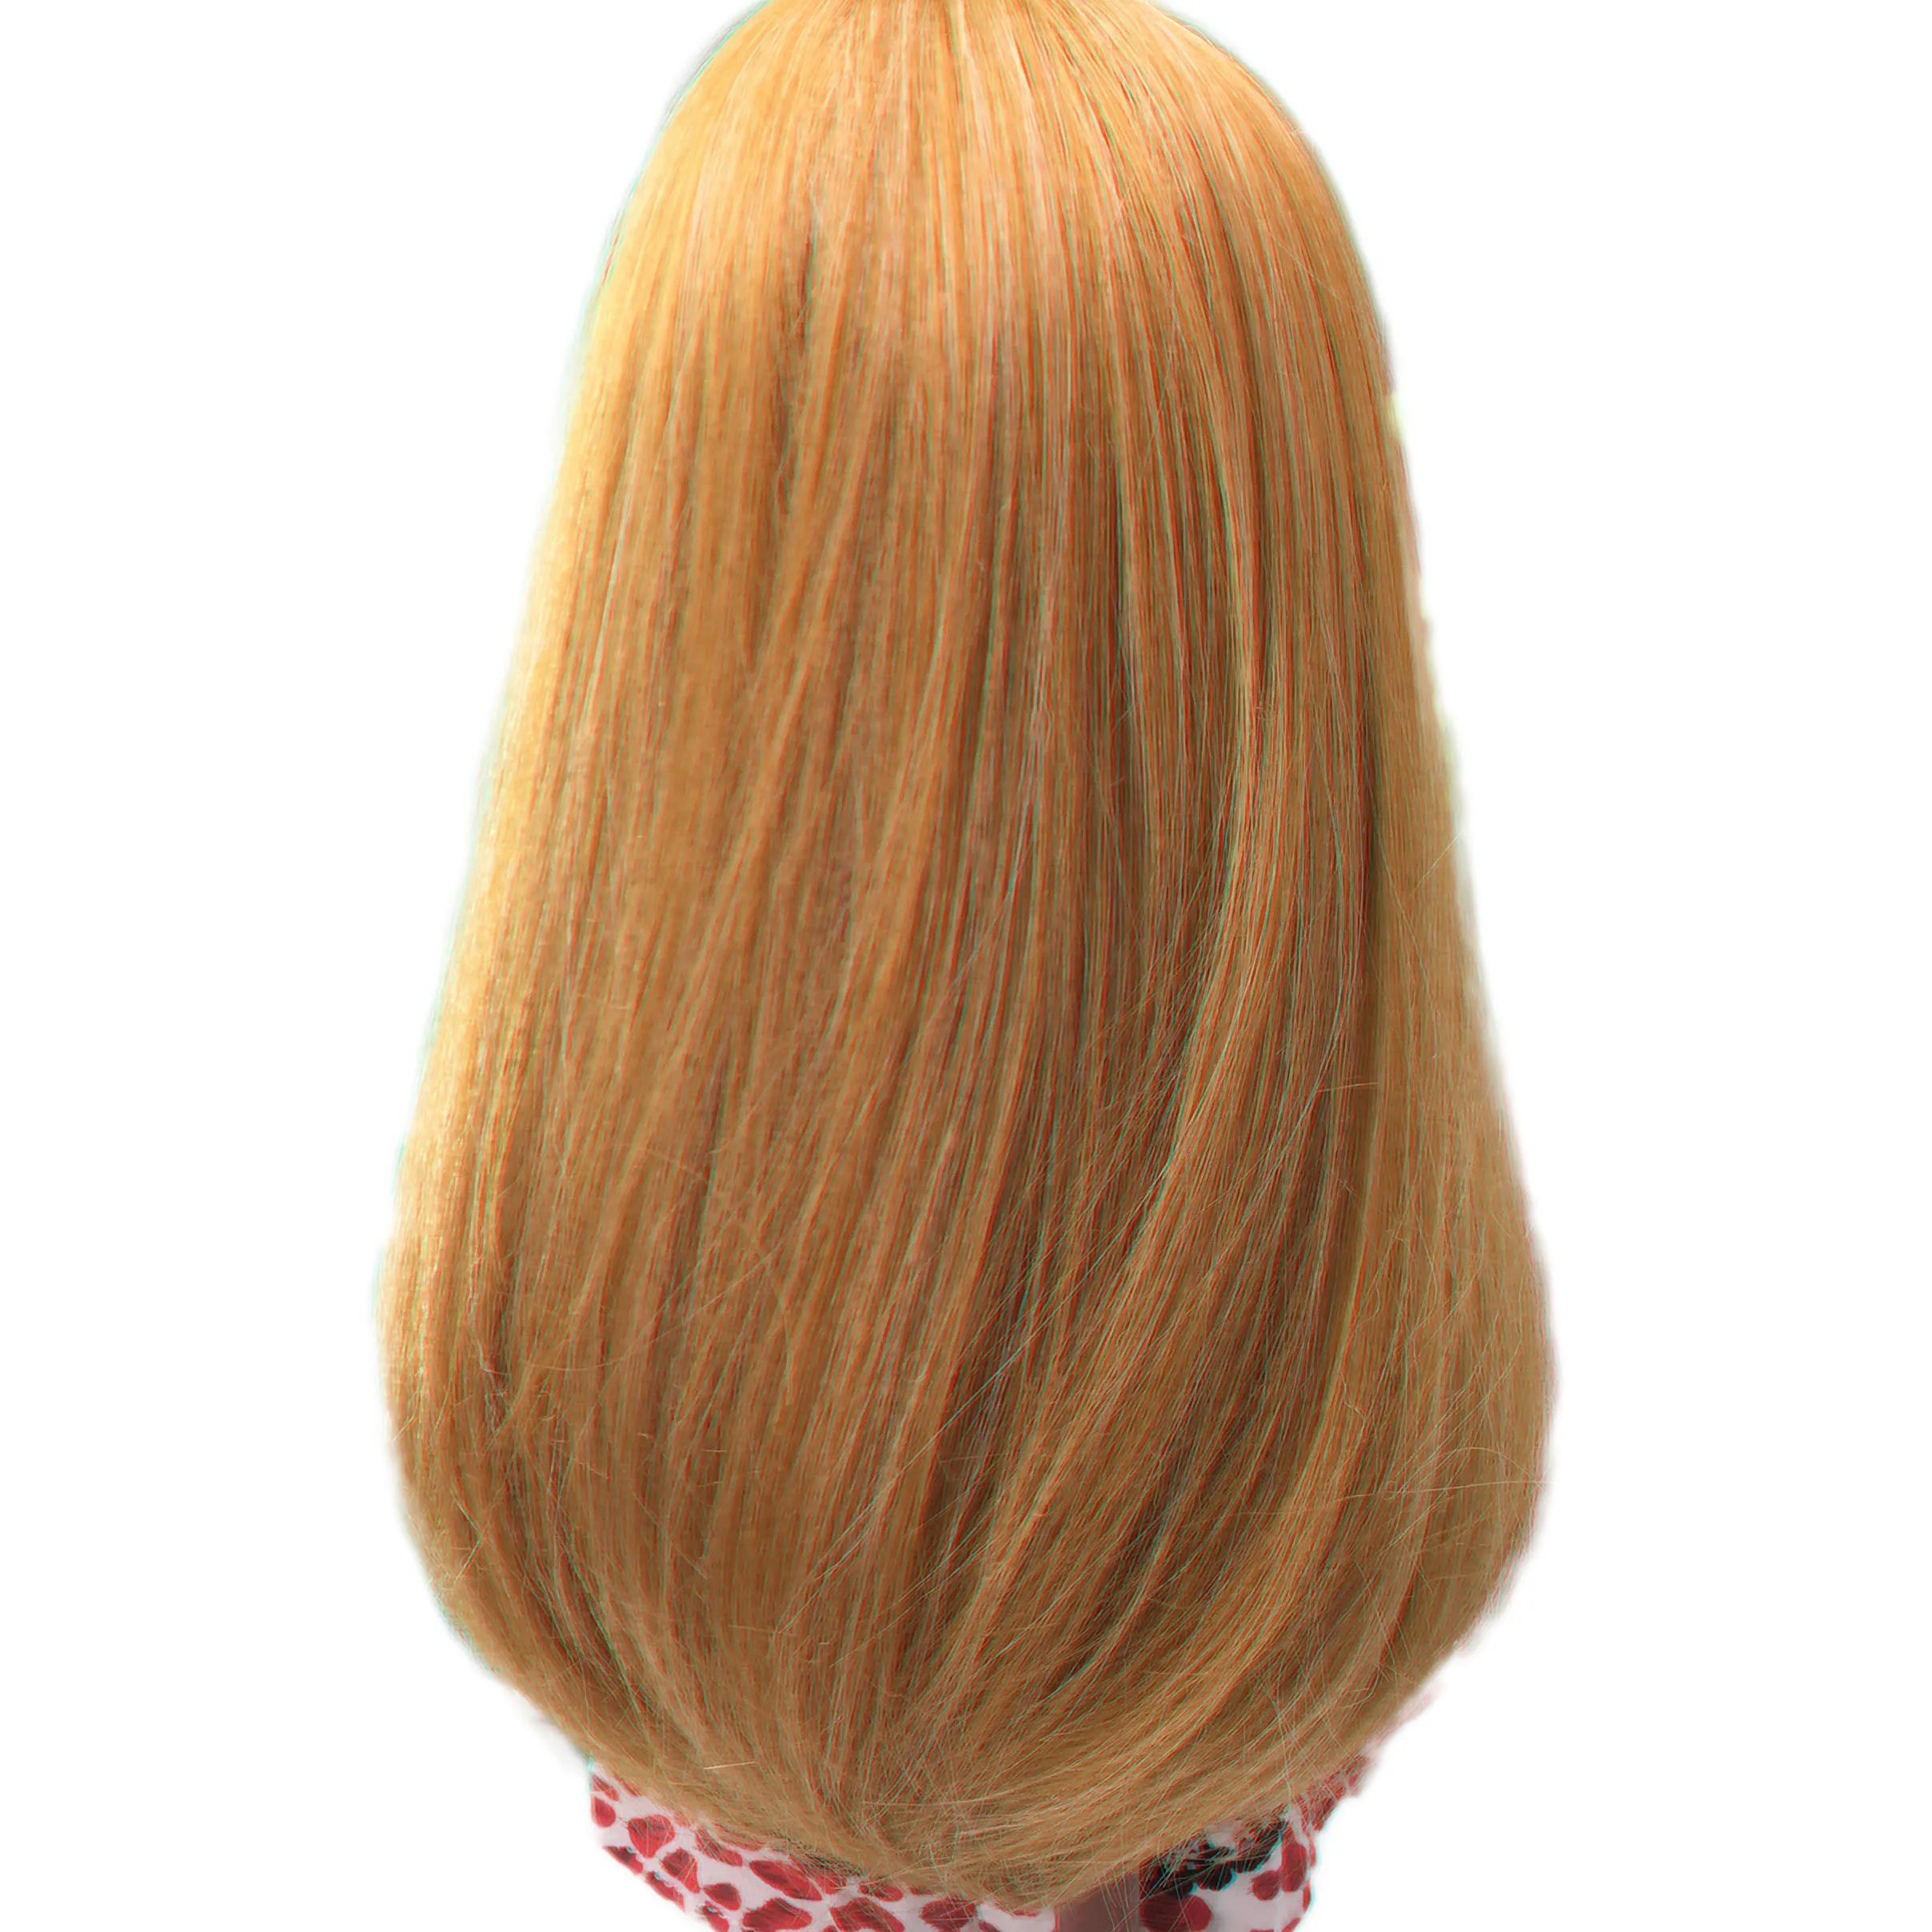 blonde doll hair